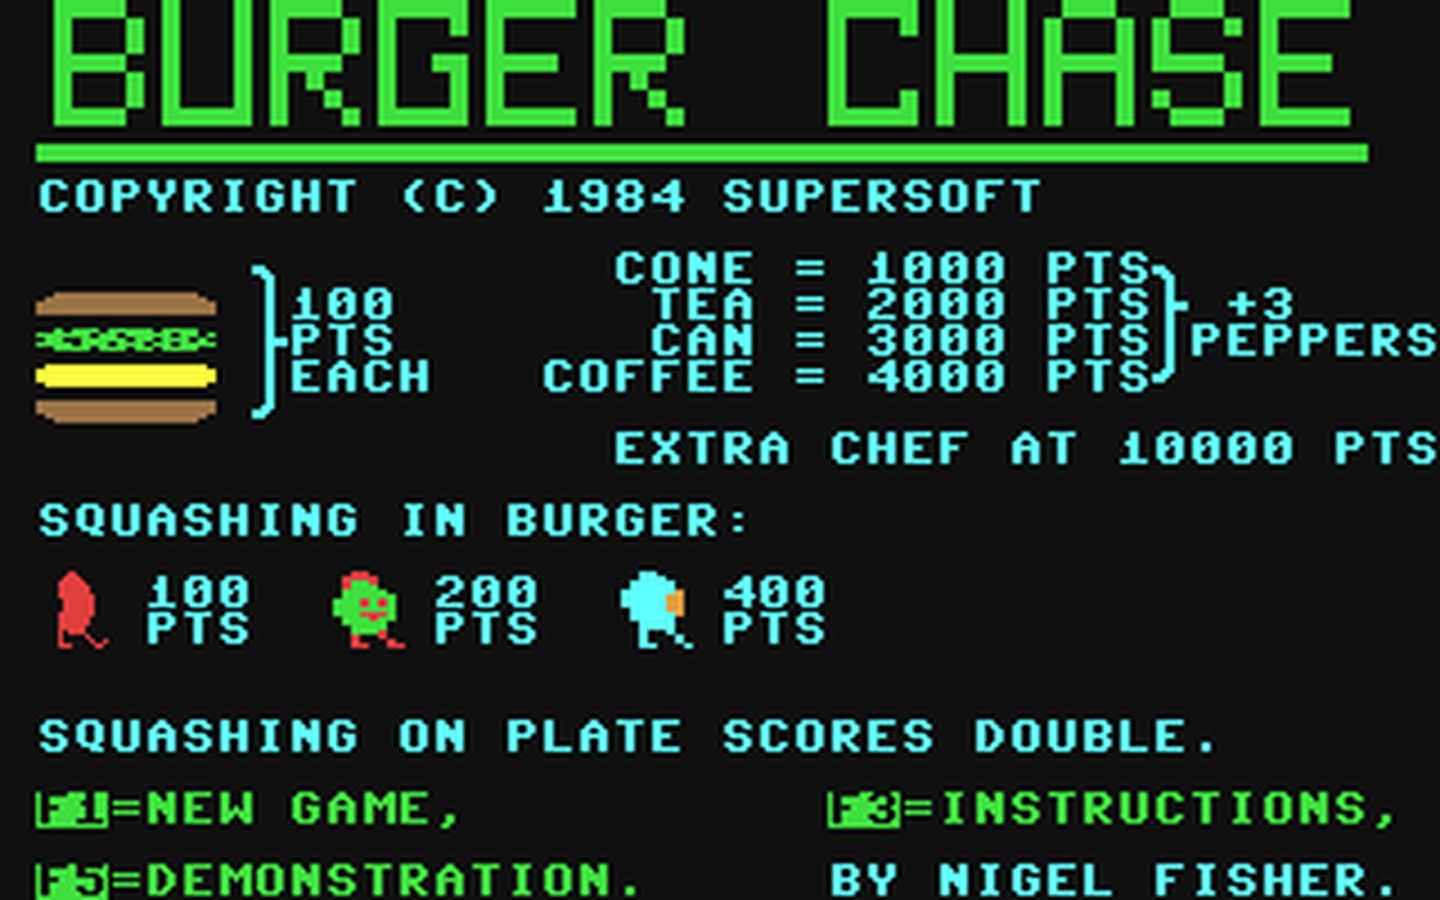 C64 GameBase Burger_Chase Supersoft 1984